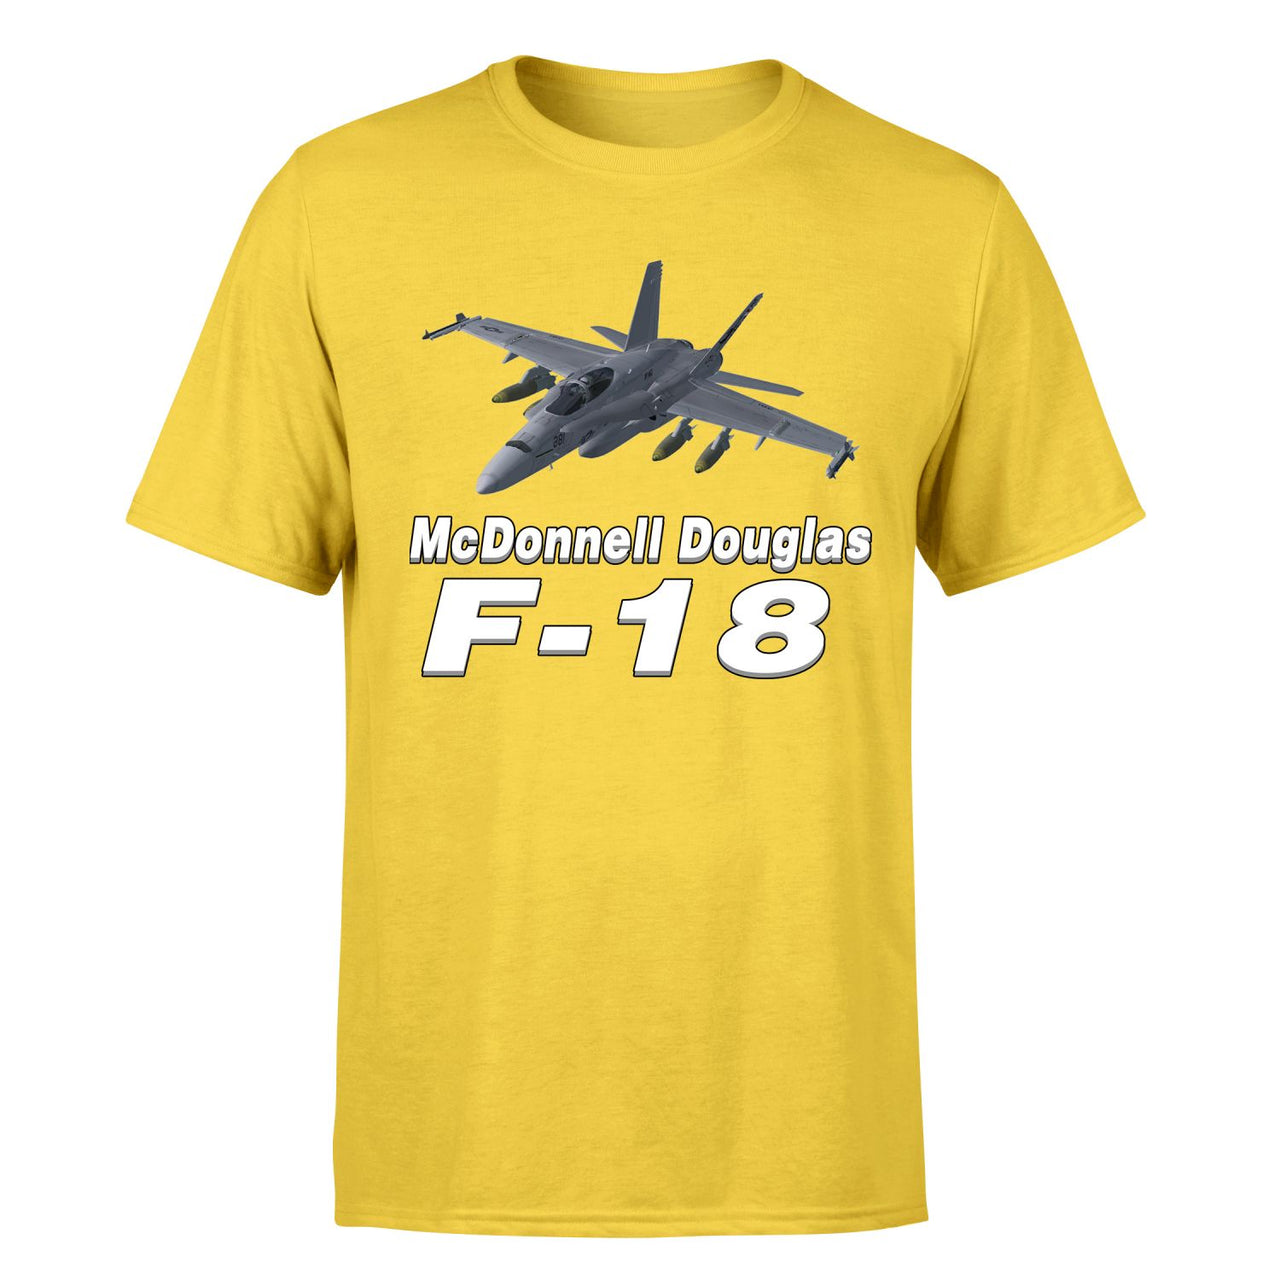 The McDonnell Douglas F18 Designed T-Shirts